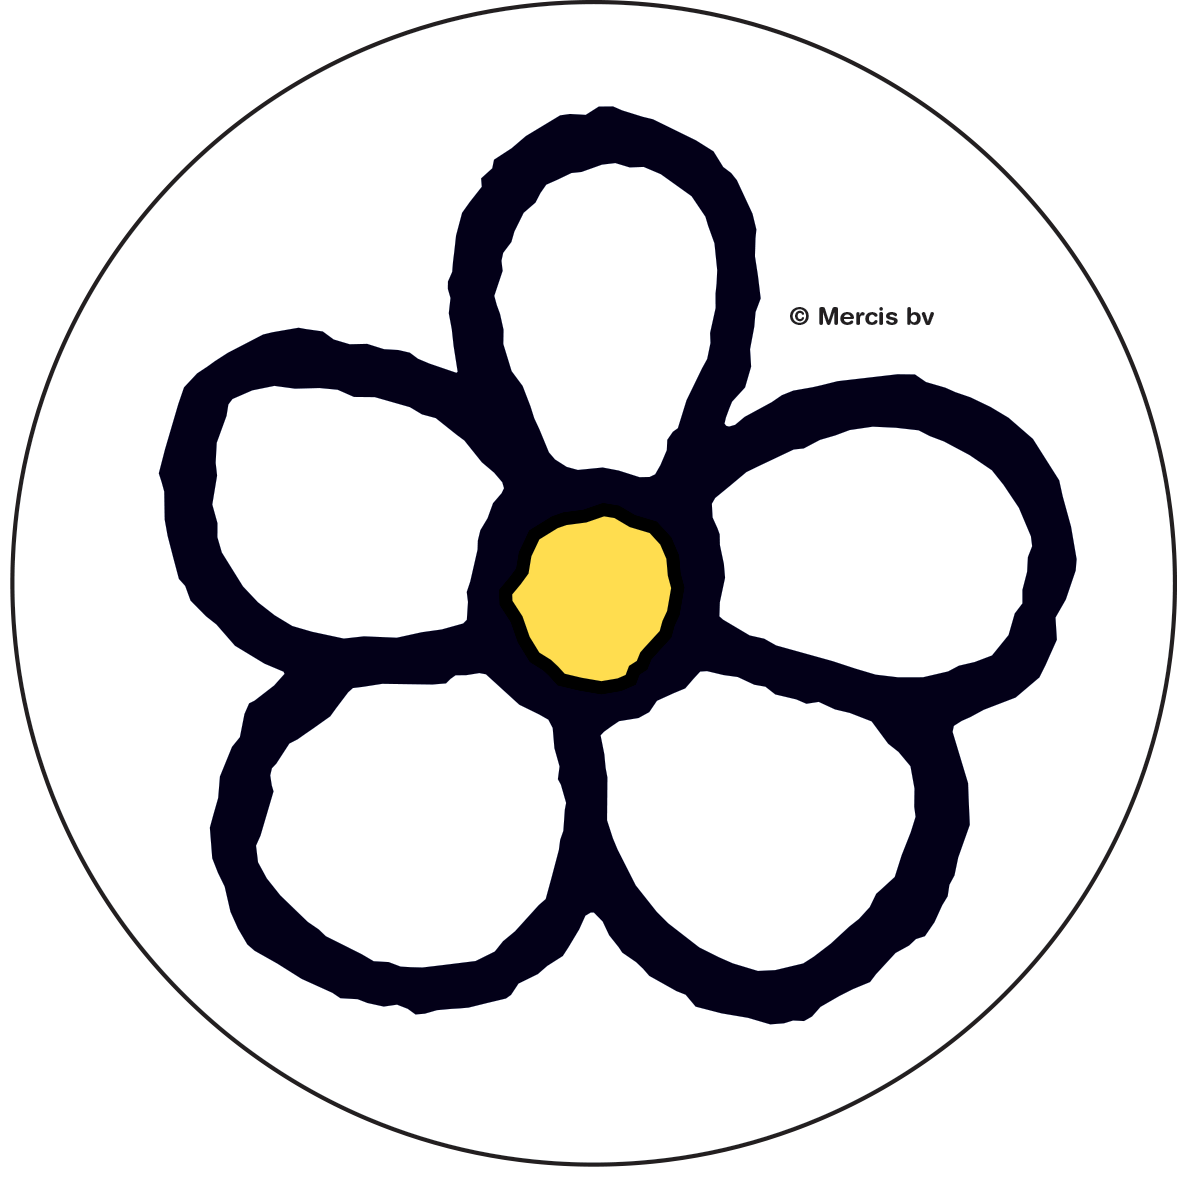 flower cartoon icon